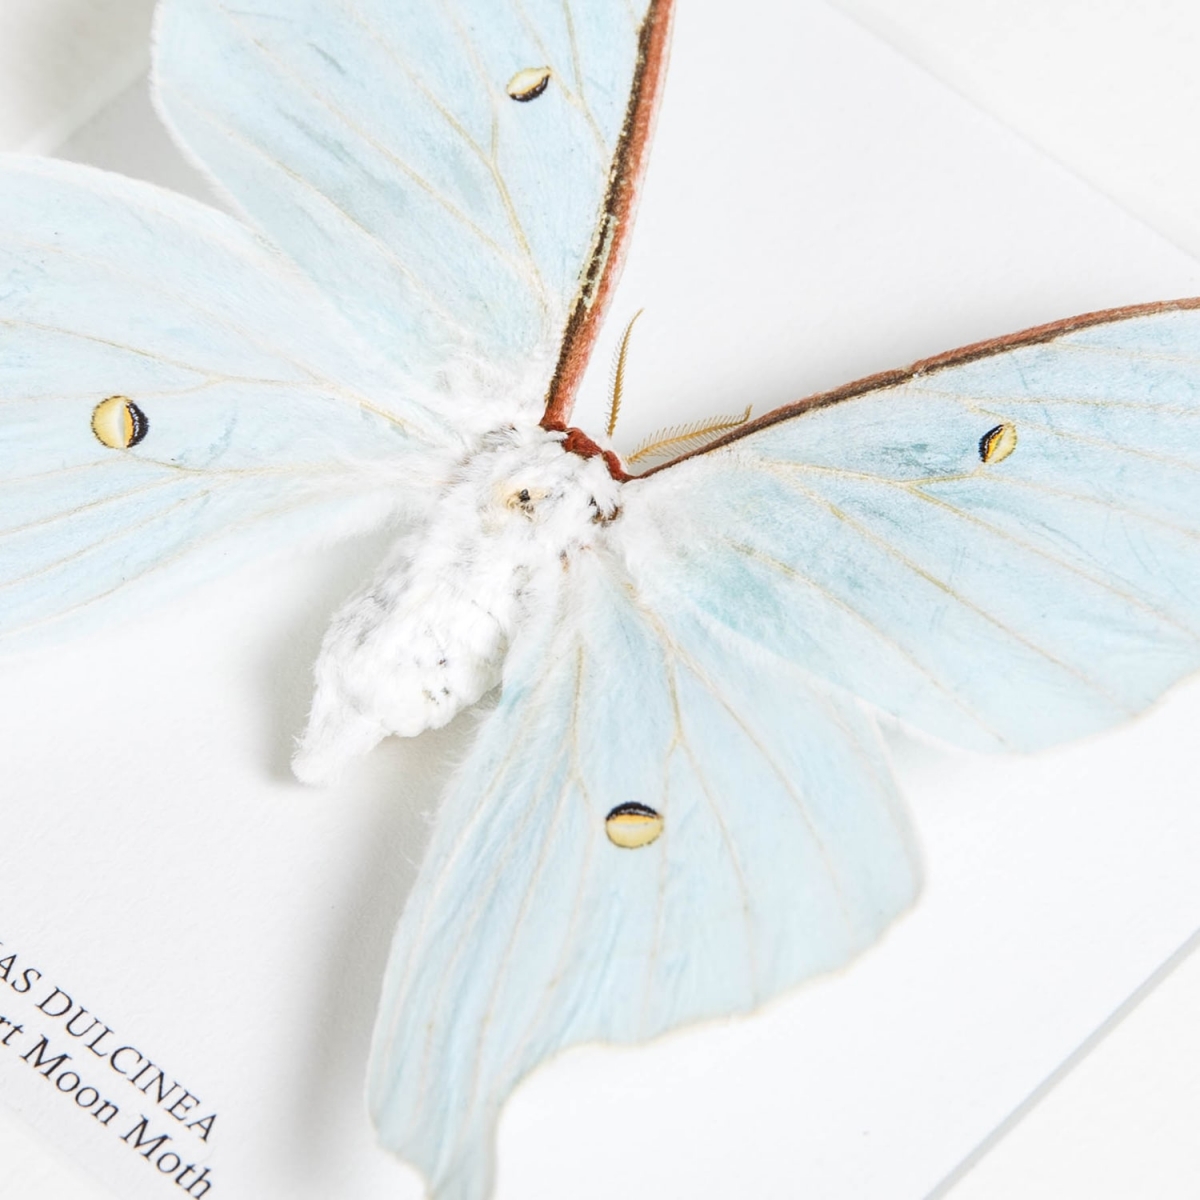 Female Sweetheart Moon Moth In Box Frame (Actias dulcinea)